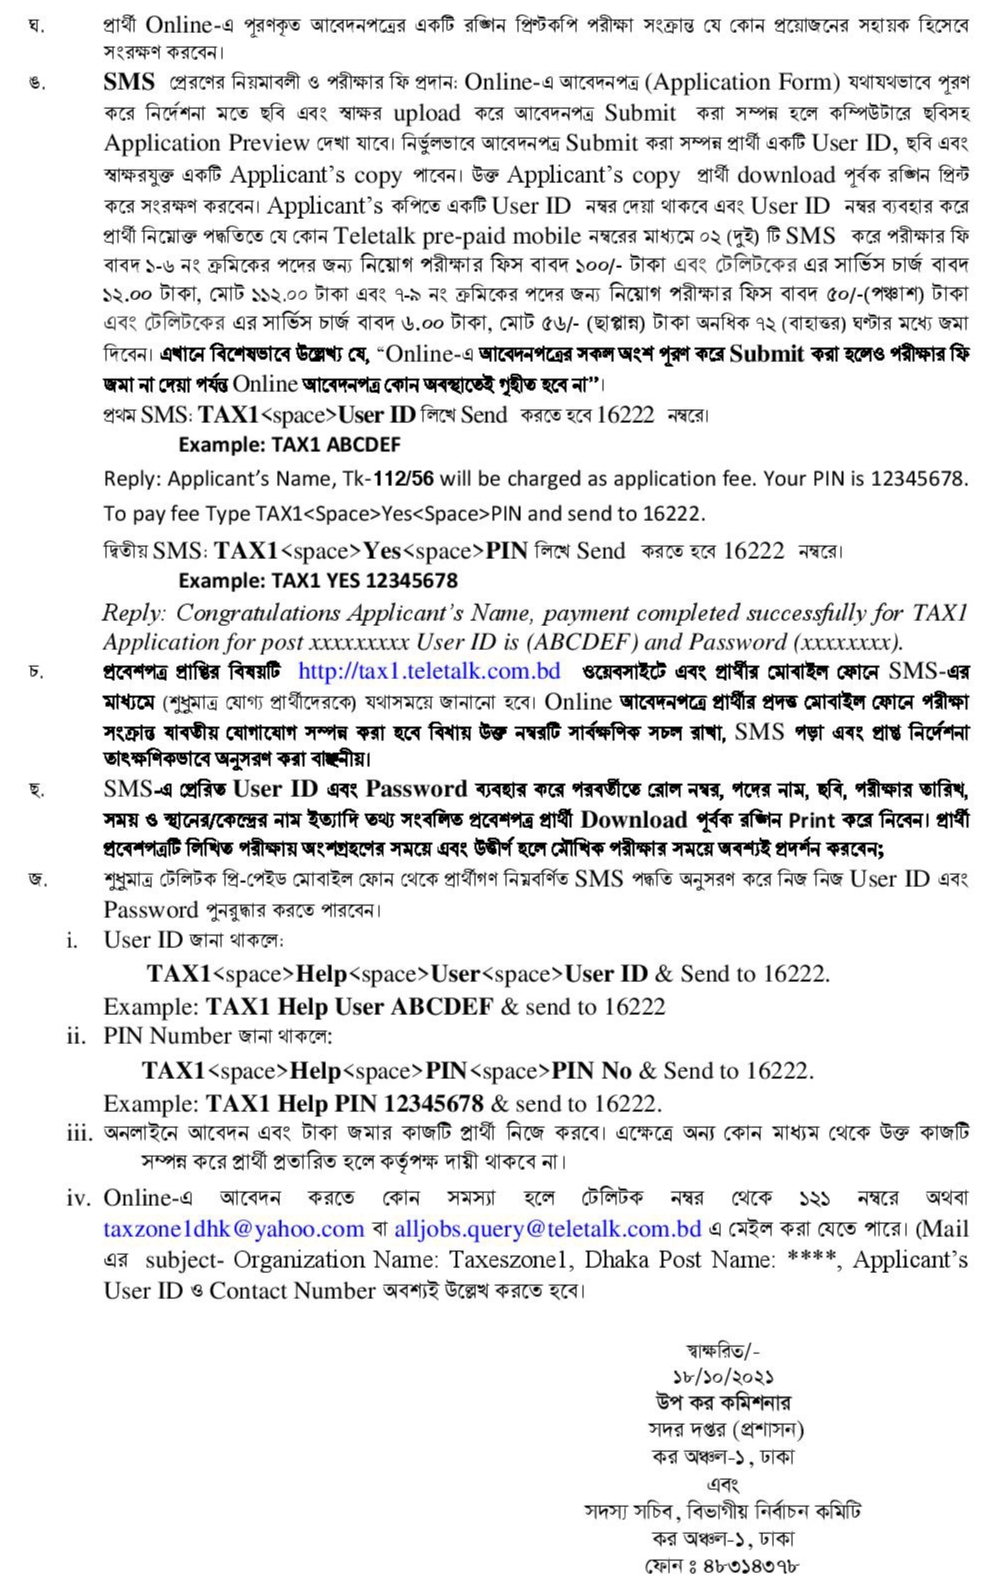 tax zone dhaka job circular 2021- কর কমিশনে নিয়োগ বিজ্ঞপ্তি ২০২১ ঢাকা